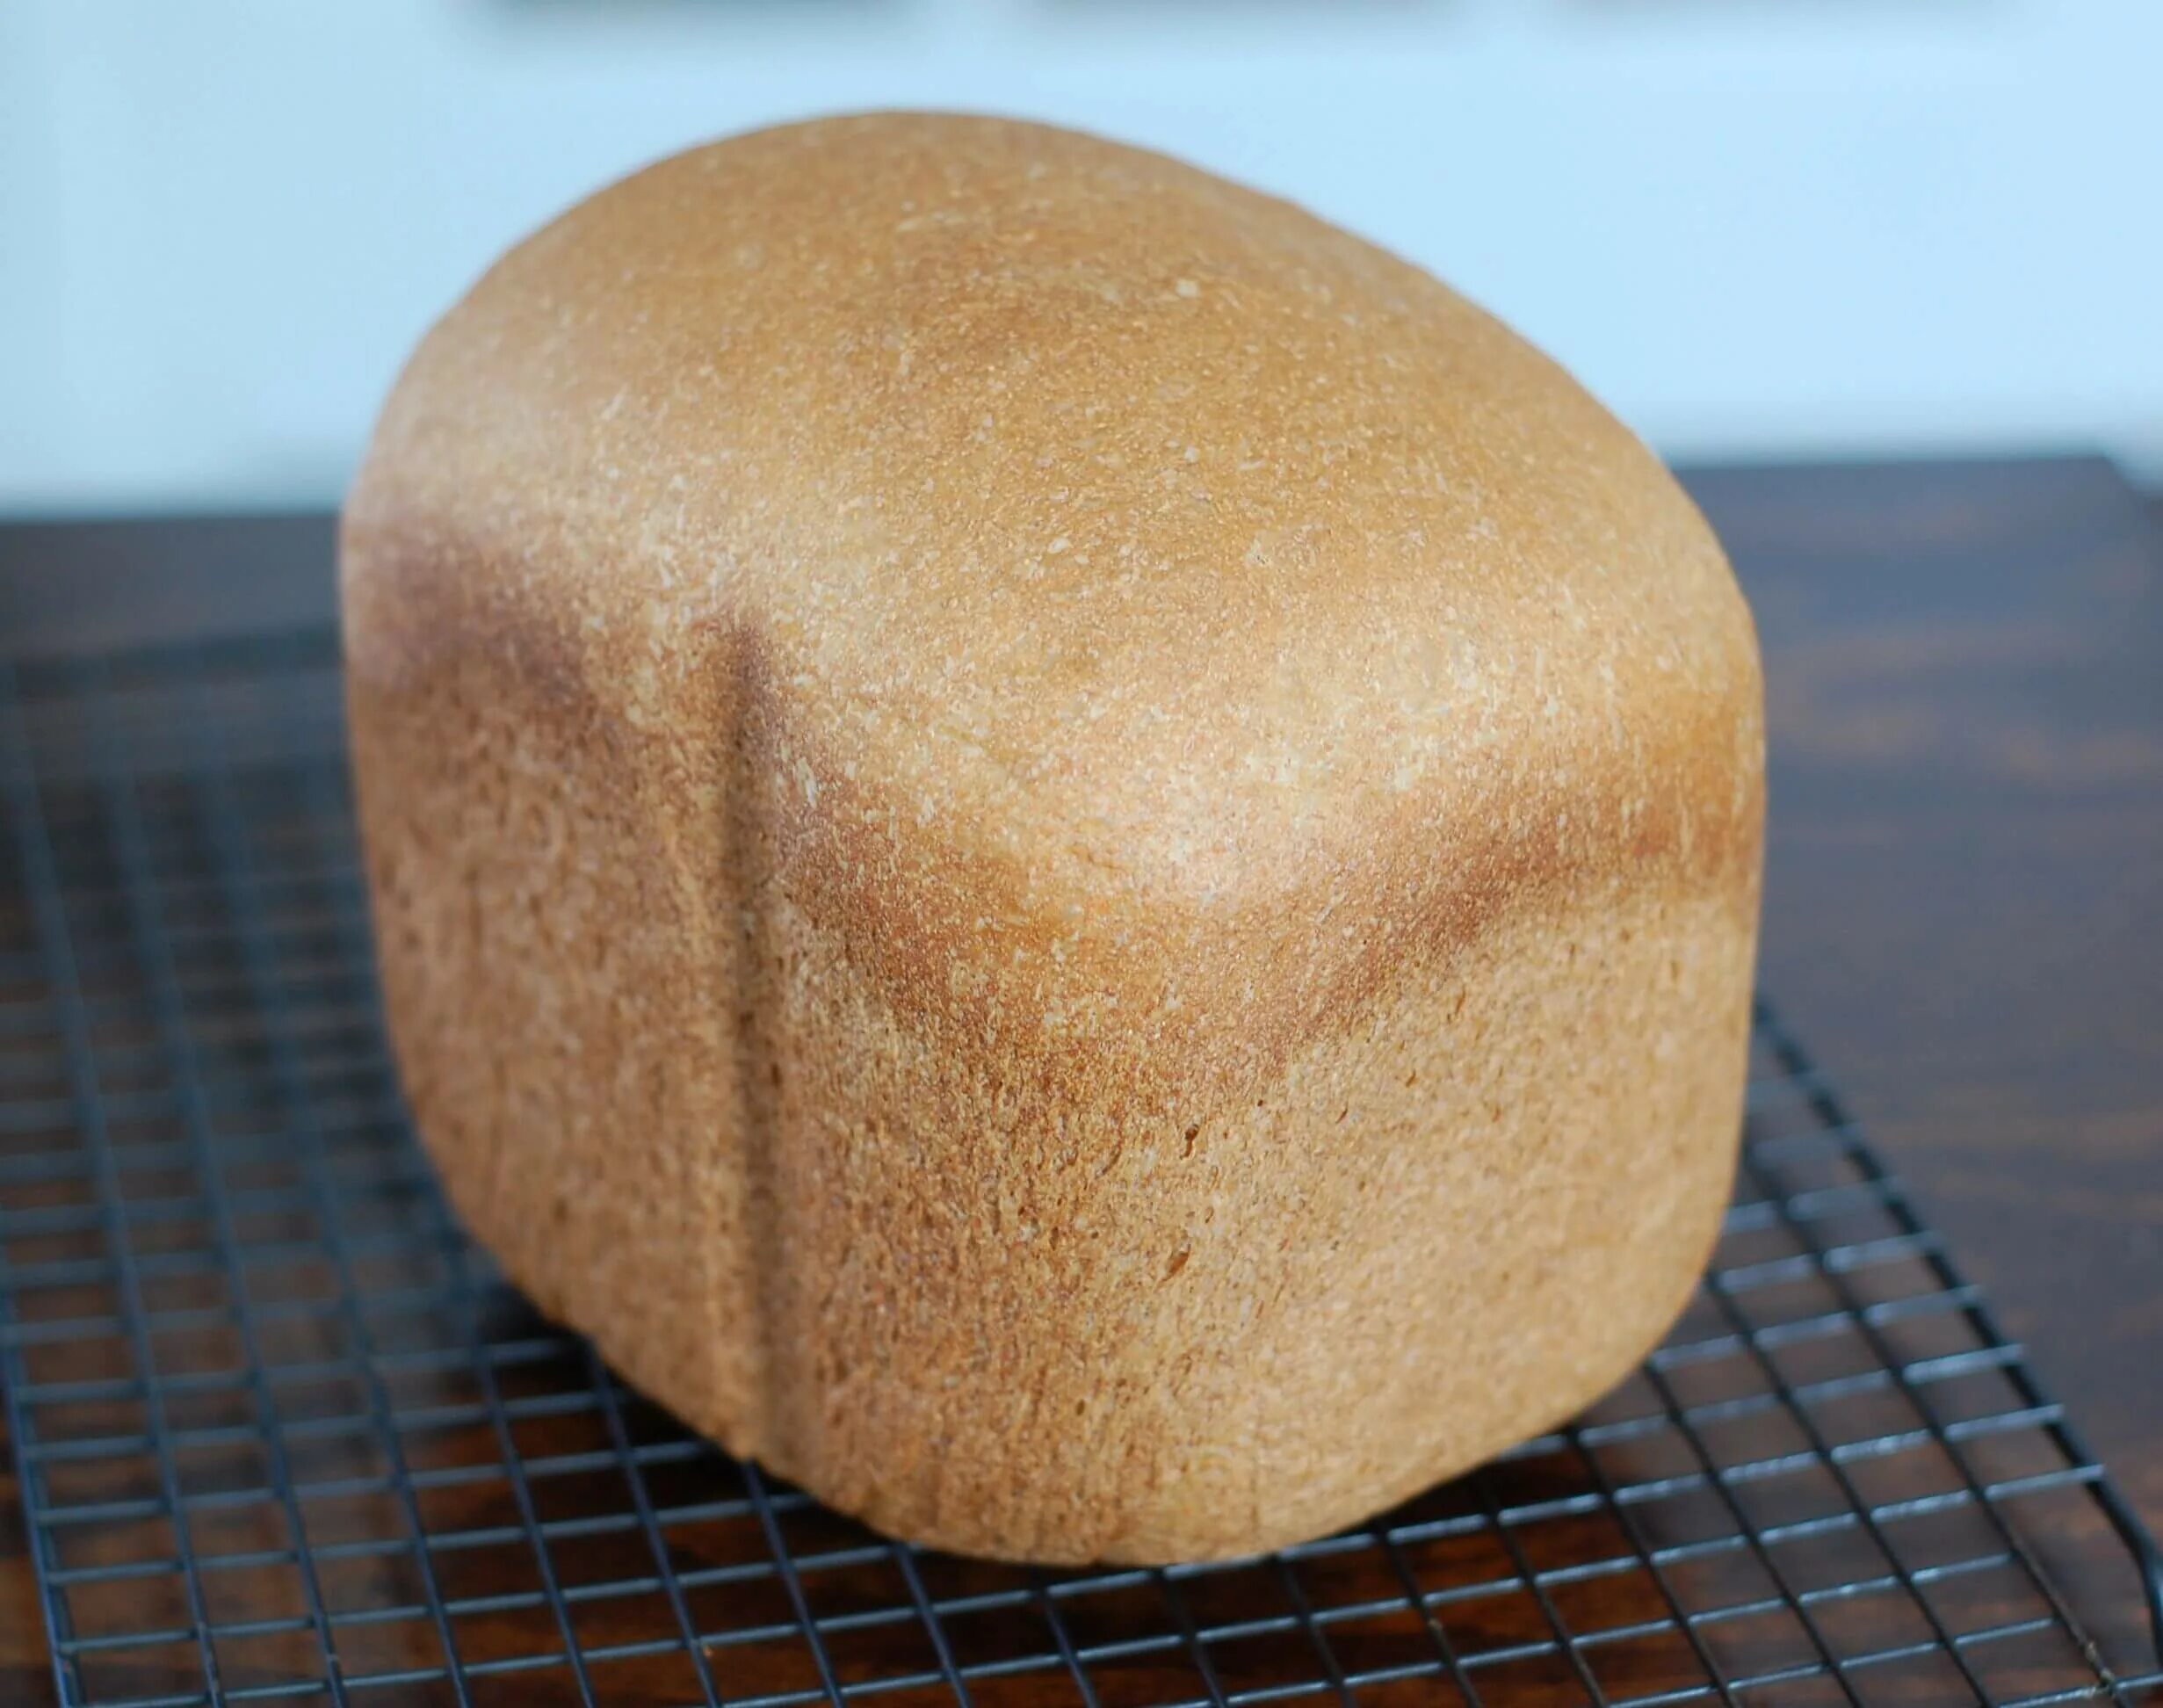 Хлеб из хлебопечки. Хлеб в хлебопечке Панасоник. Хлеб в хлебопечке на бутерброды. Хлеб из хлебопечки Панасоник.